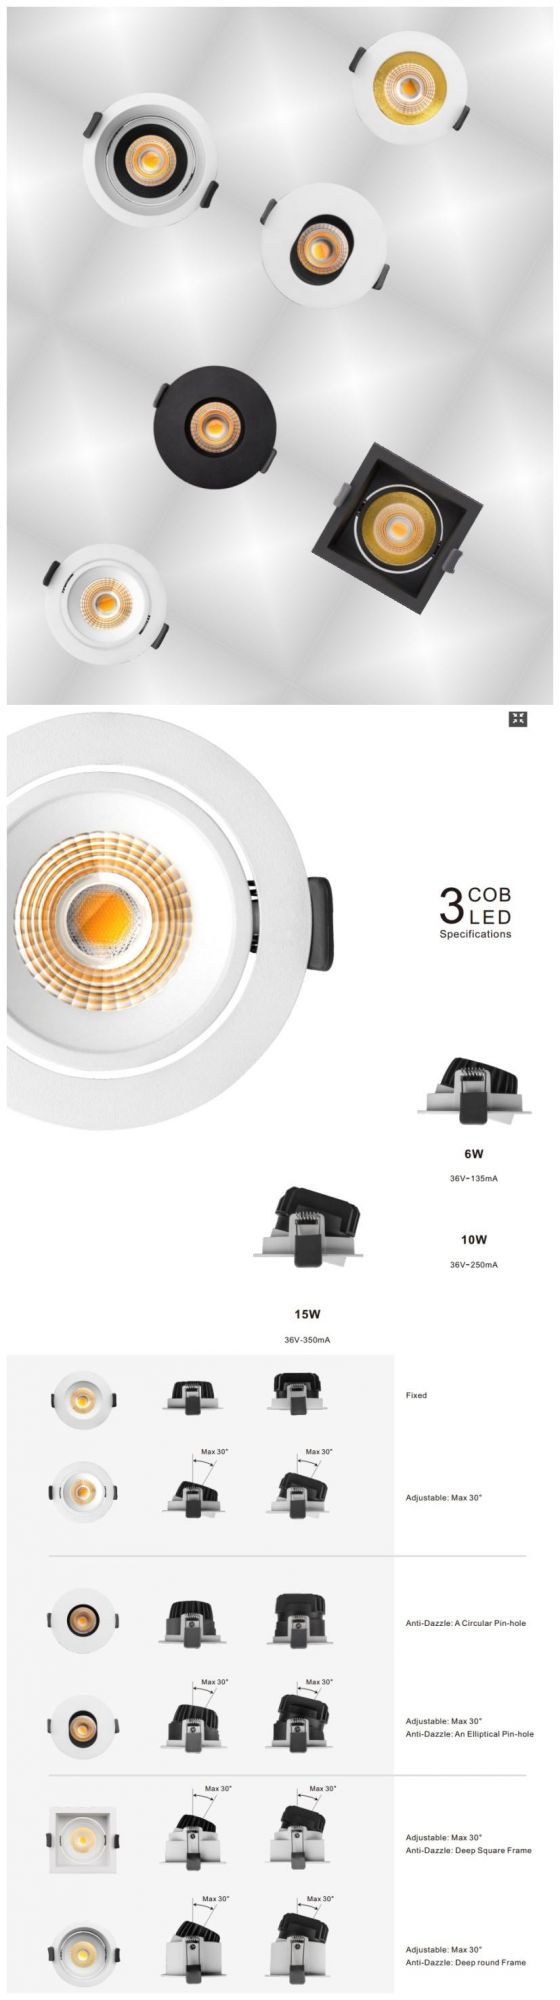 Professional 6-Frame Pine-Hole Lighting Dimmalbe COB LED Downlights Spotlight Recessed Downlight Fixture